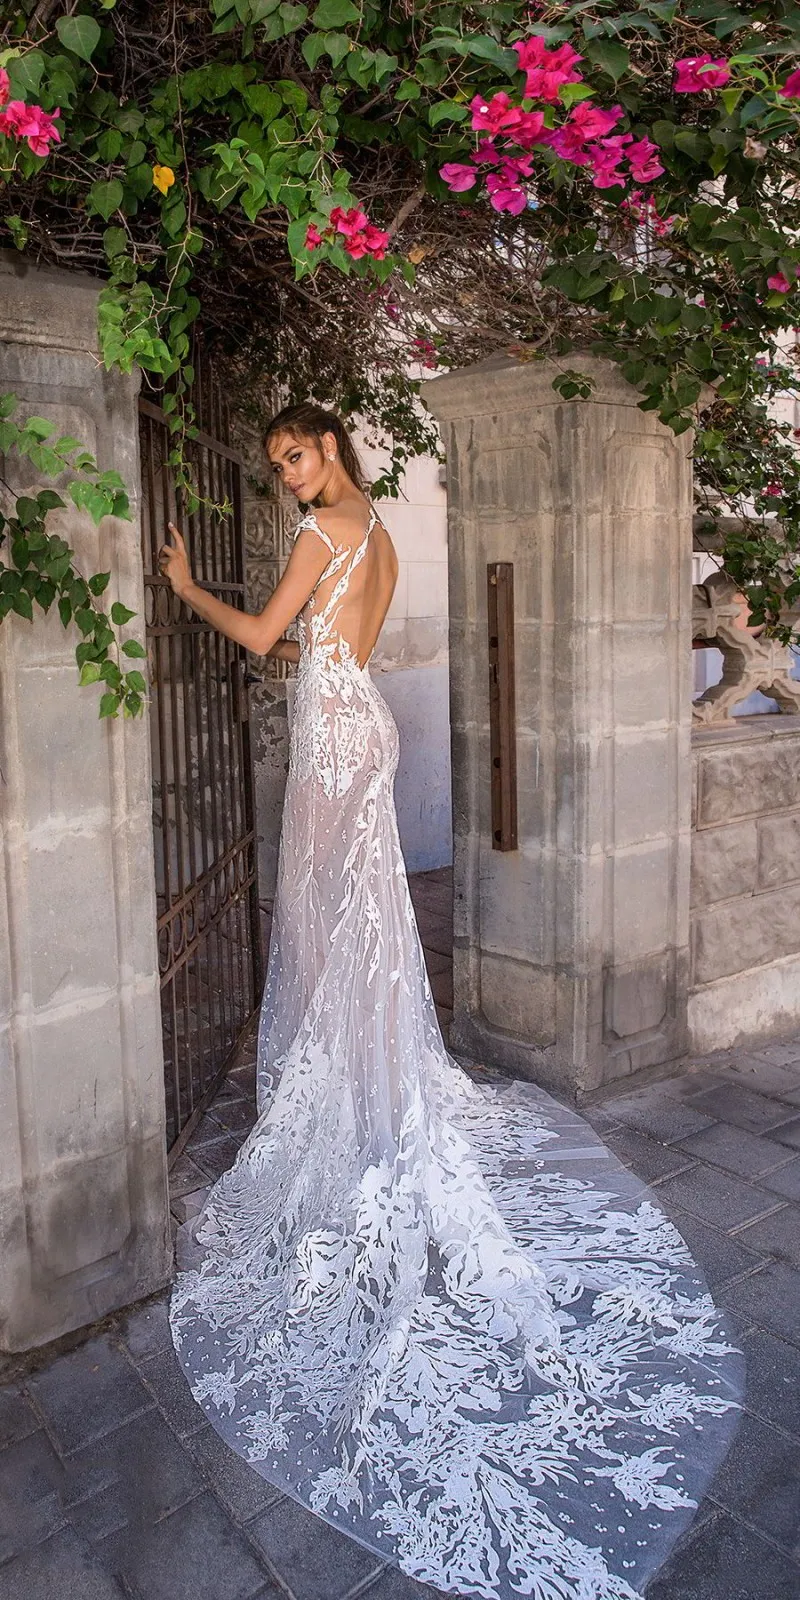 2019 Elihav Sasson Meerjungfrau Brautkleider Sheer Neck Lace Brautkleider Vestido de Novia Cap Sleeve Beach Wedding Dress279c